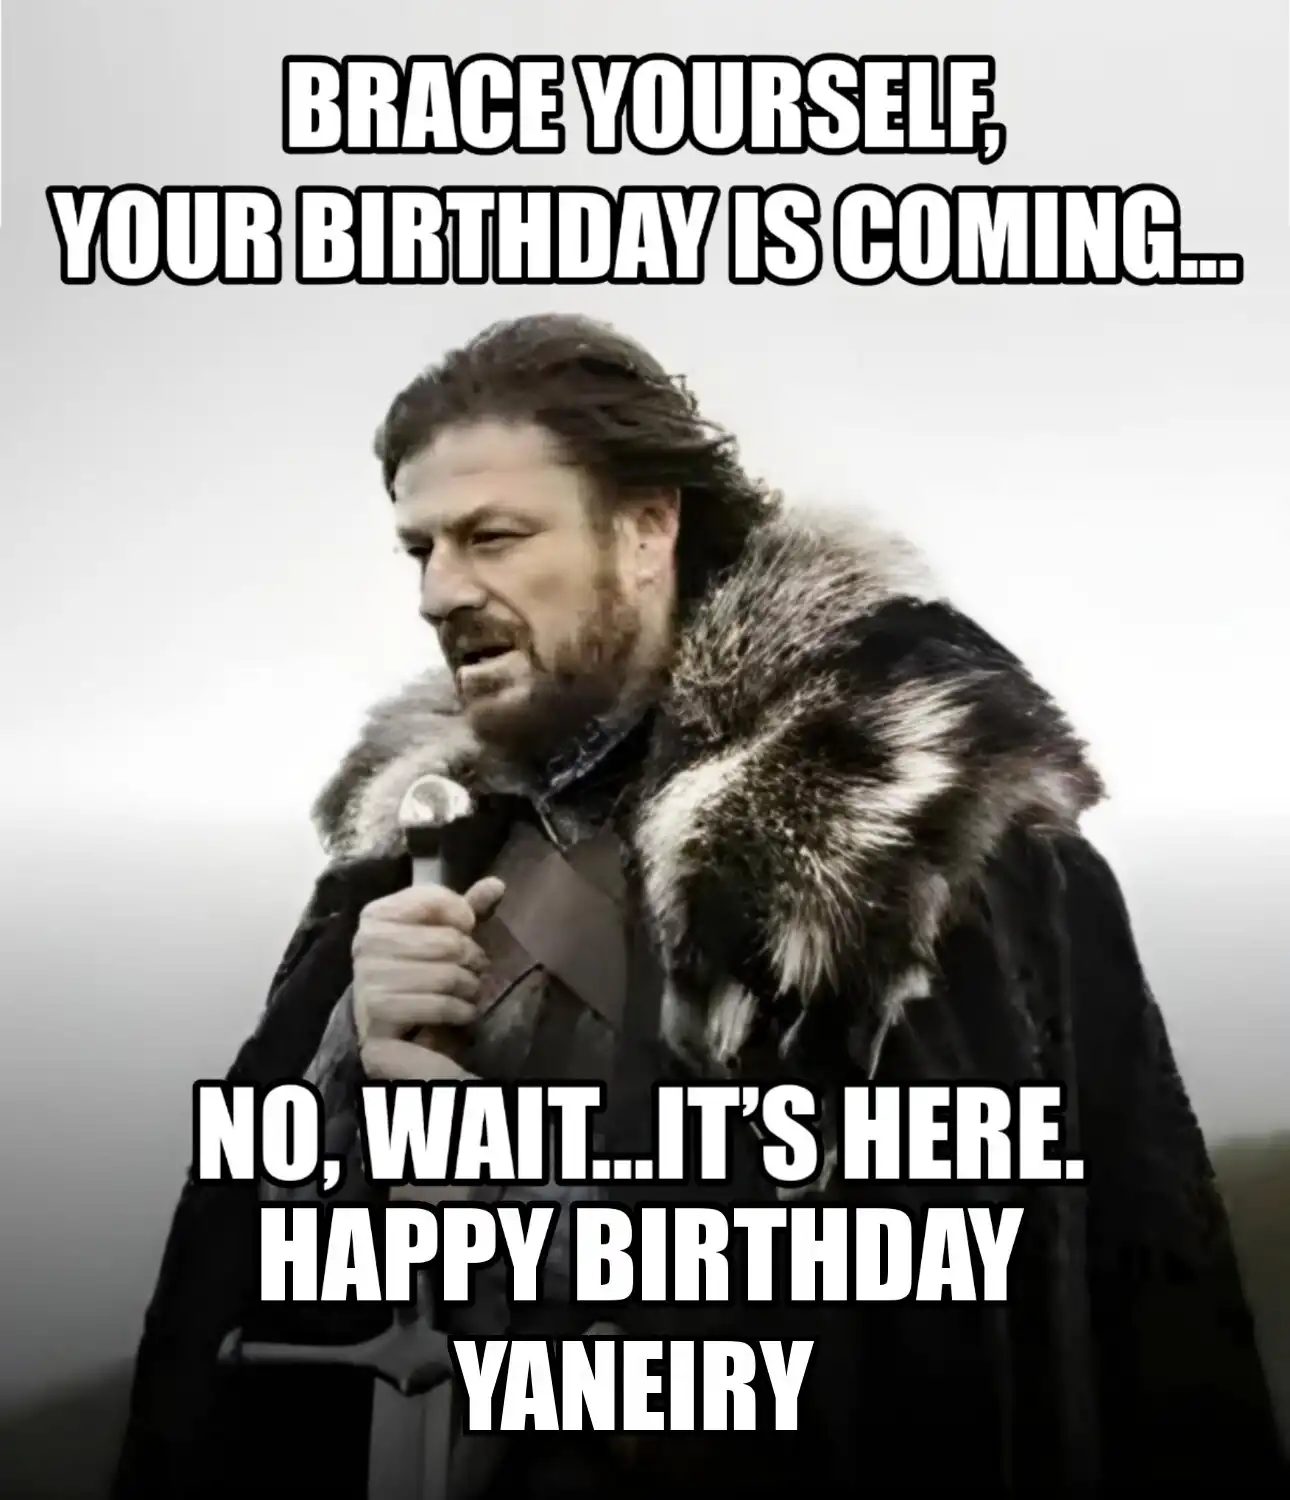 Happy Birthday Yaneiry Brace Yourself Your Birthday Is Coming Meme